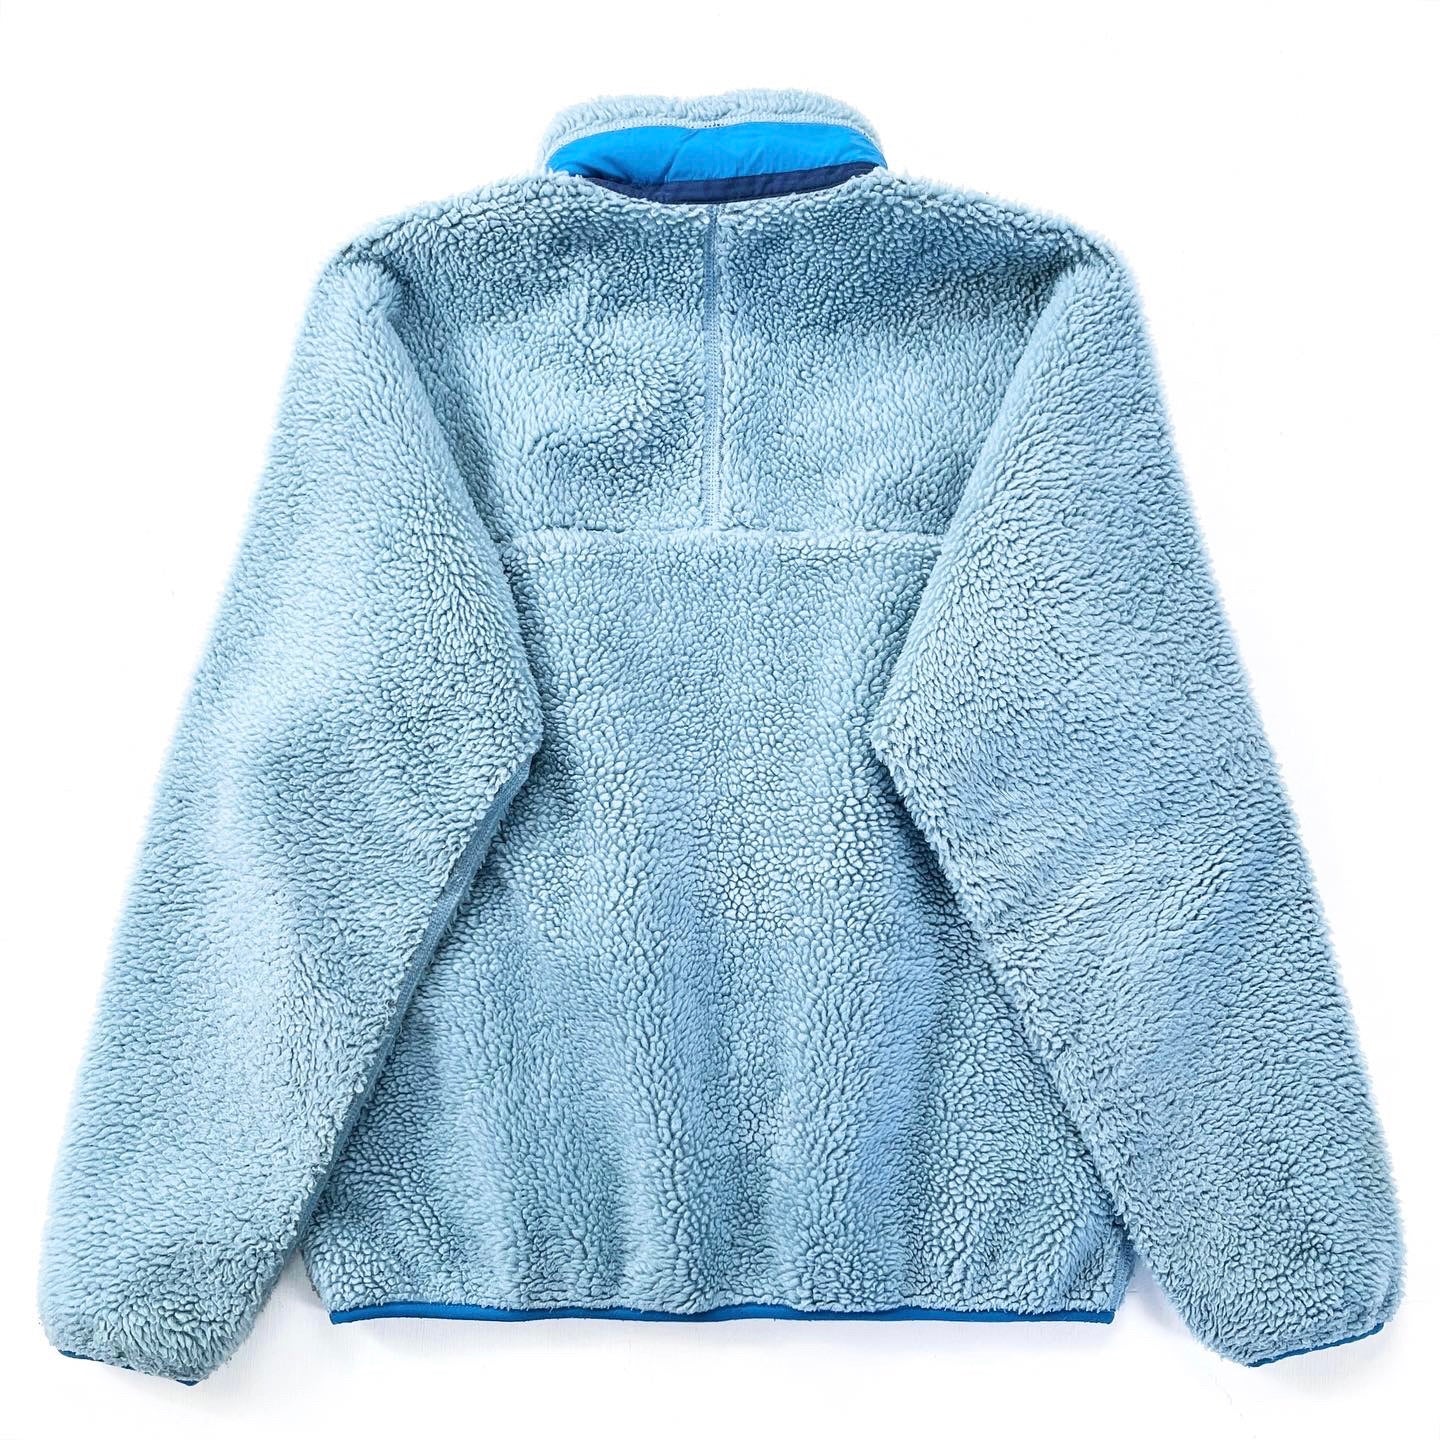 2012 Patagonia Classic Retro-X Fleece Jacket, Glacier Blue (M)